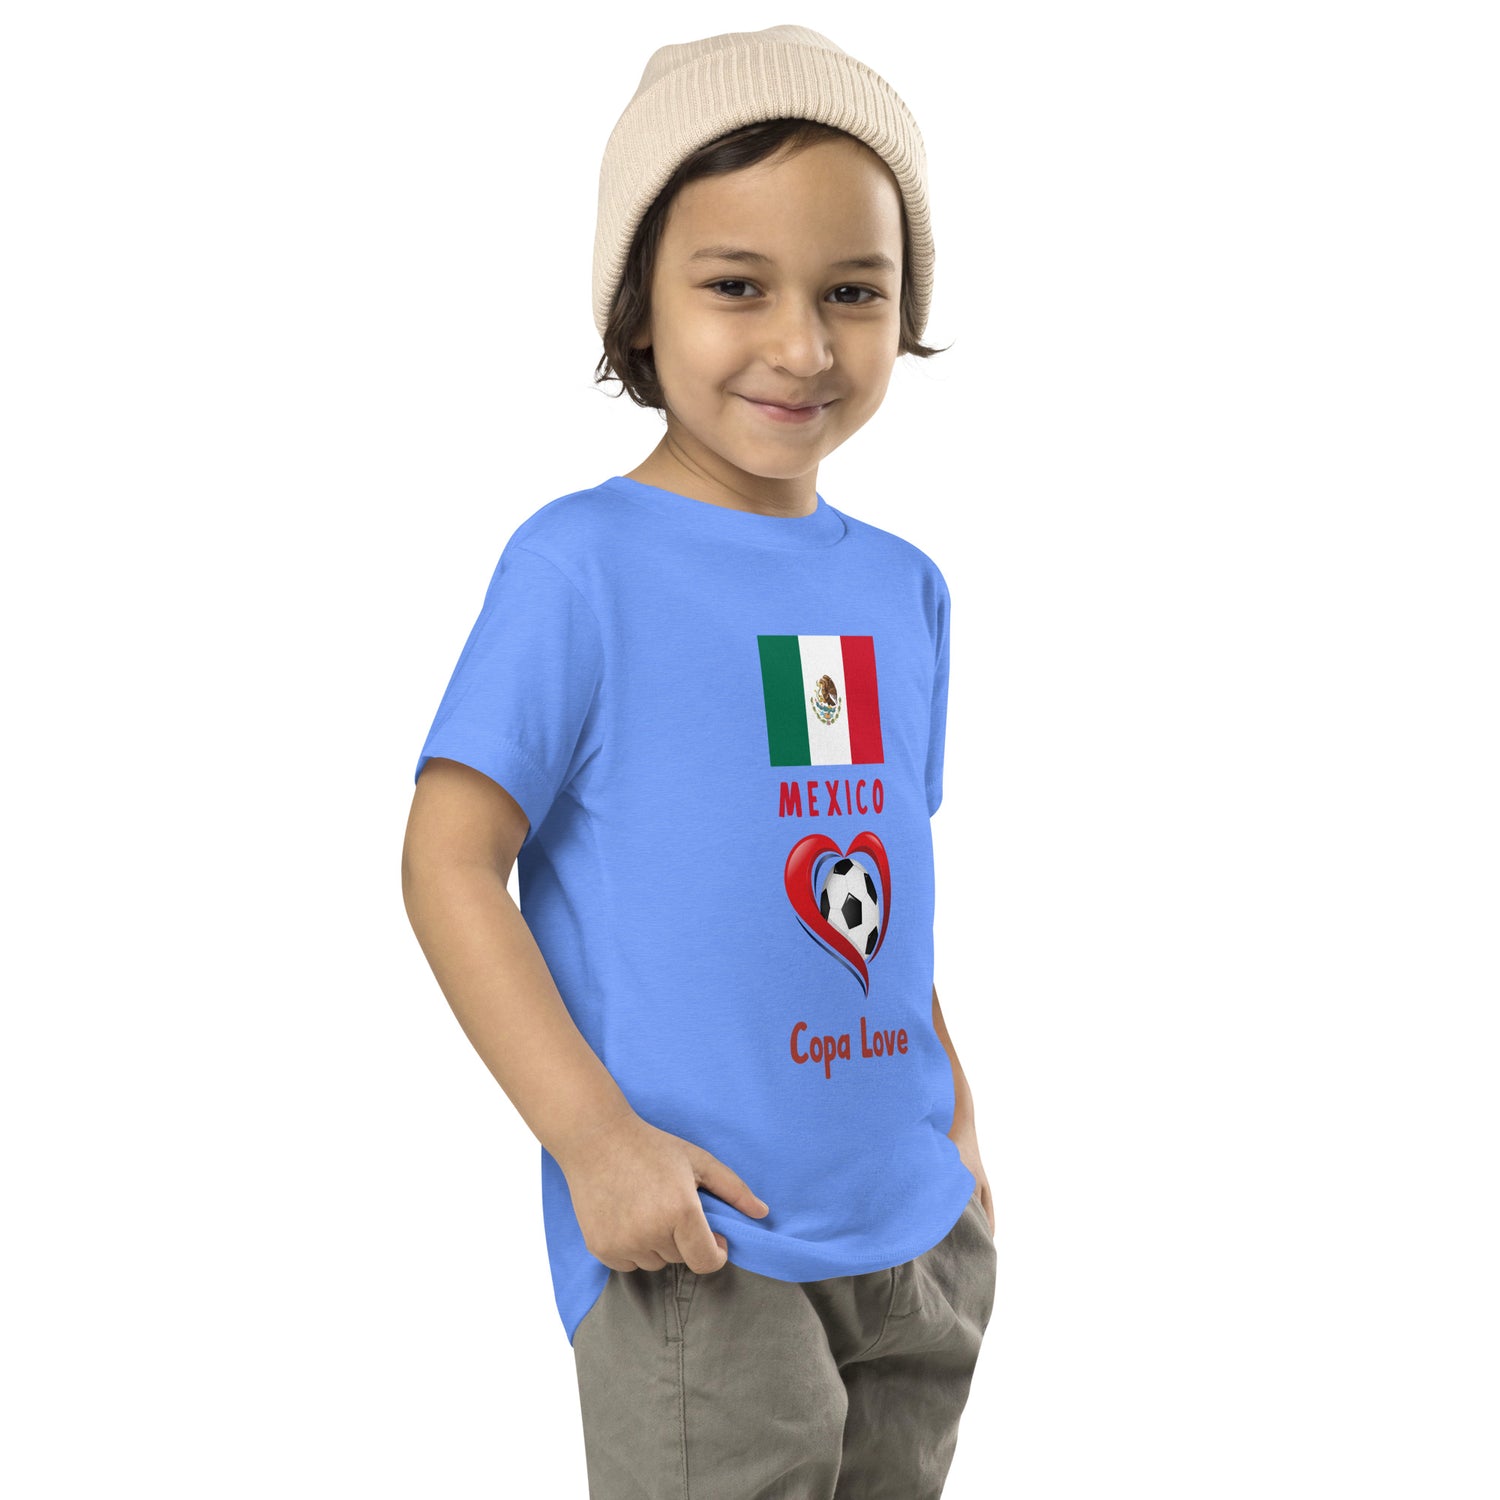 MEXICO - Copa Love Toddler Short Sleeve Tee